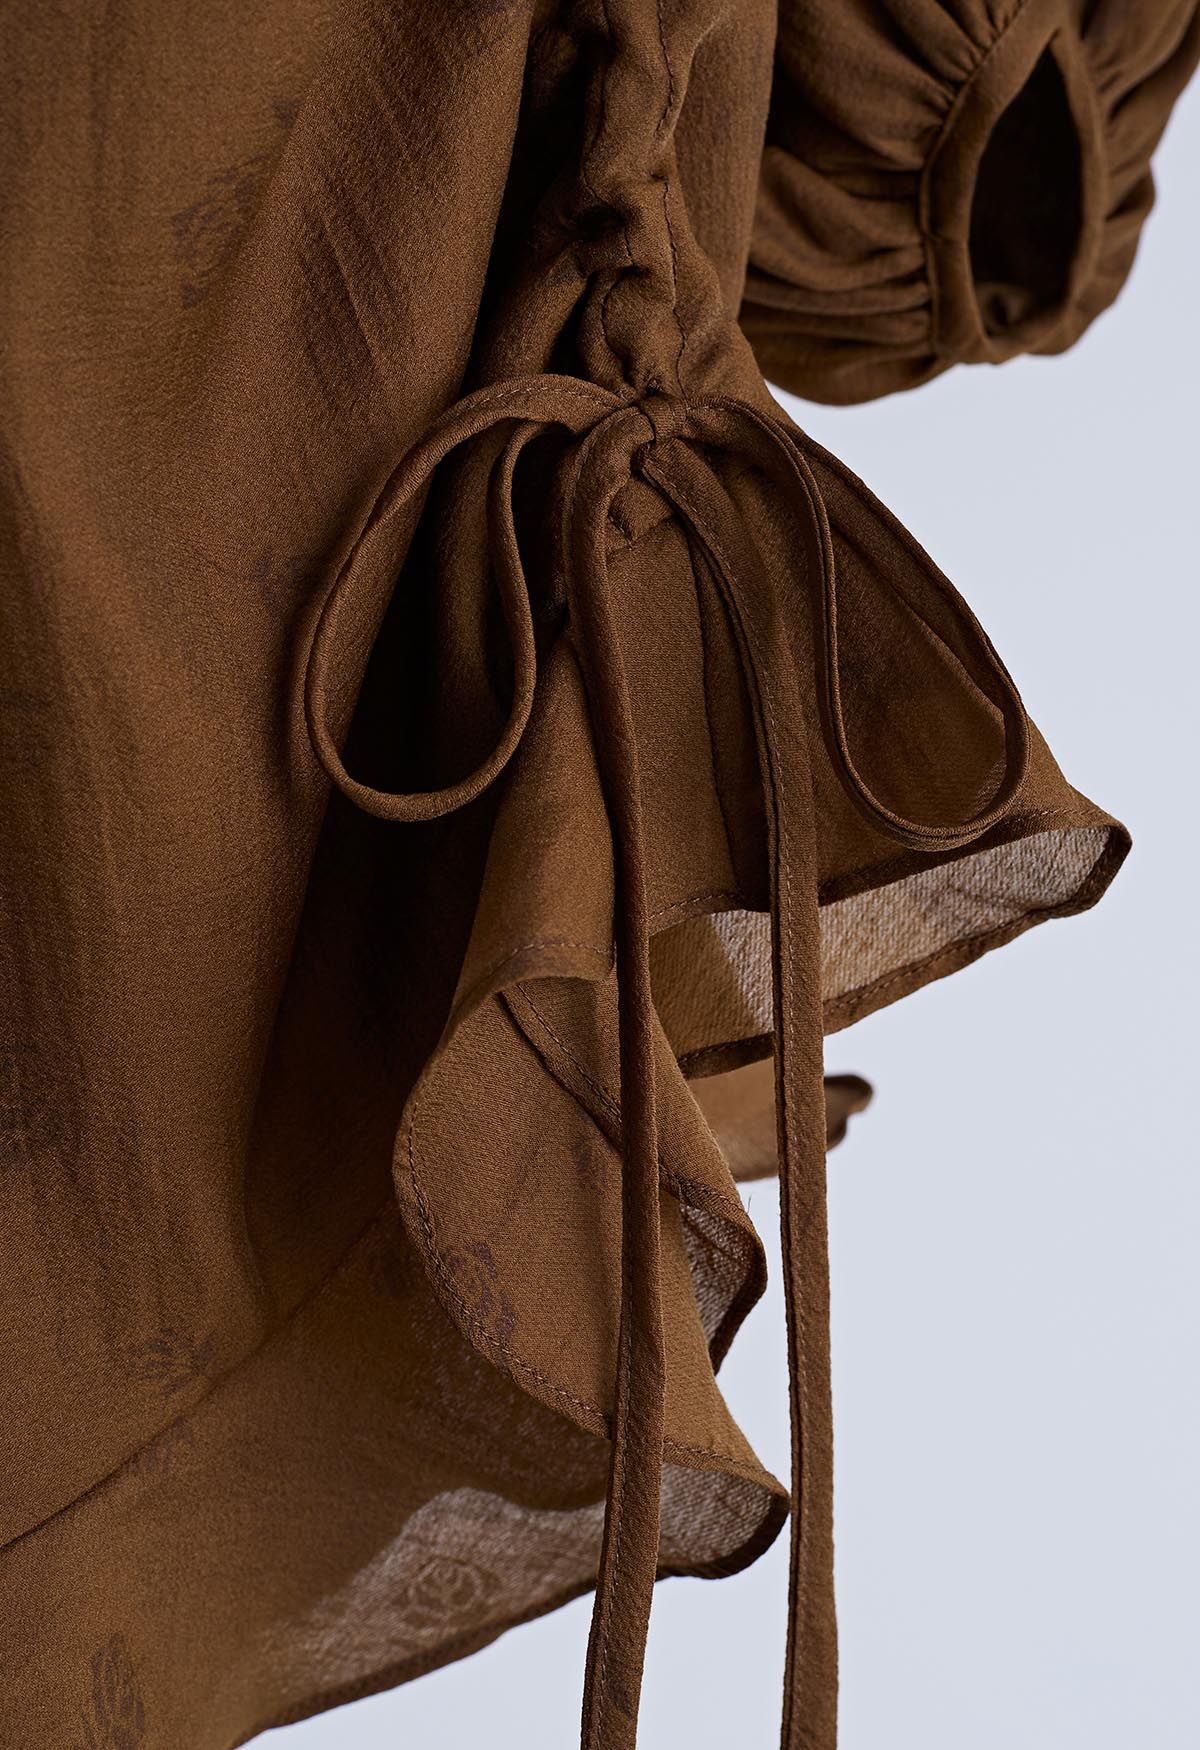 Asymmetric Ruffle Hem Floral Midi Dress in Brown